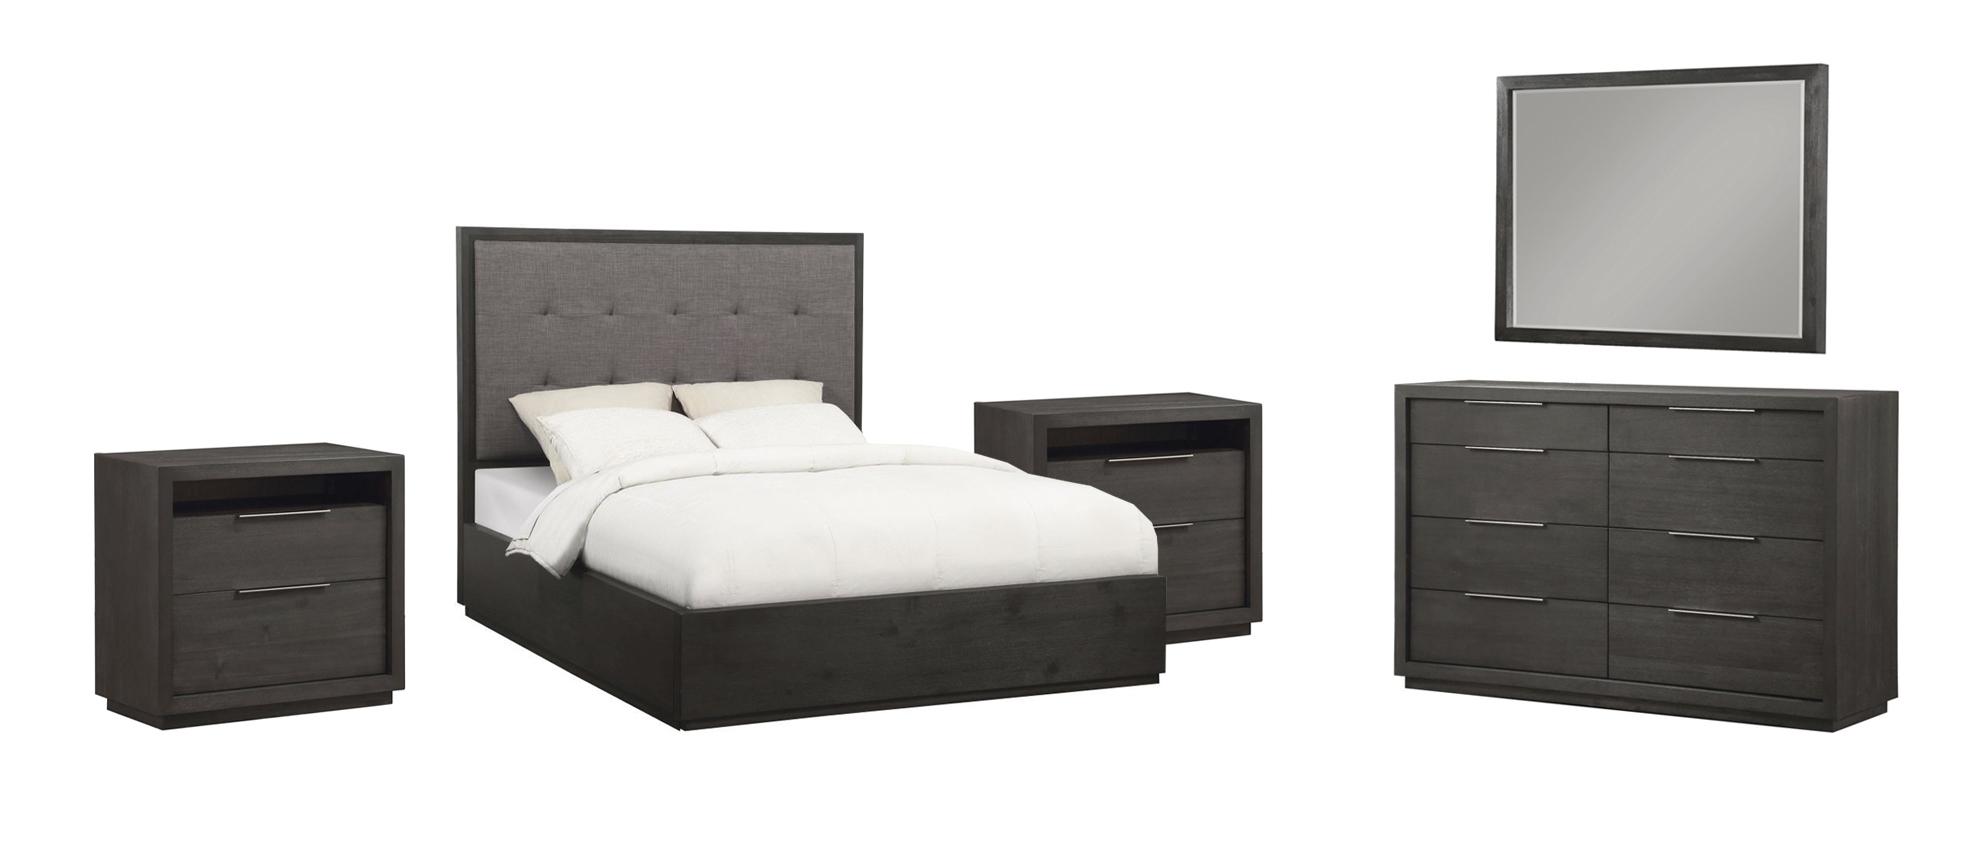 Contemporary Platform Bedroom Set OXFORD AZU5F5D-2NDM-5PC in Dark Gray Fabric